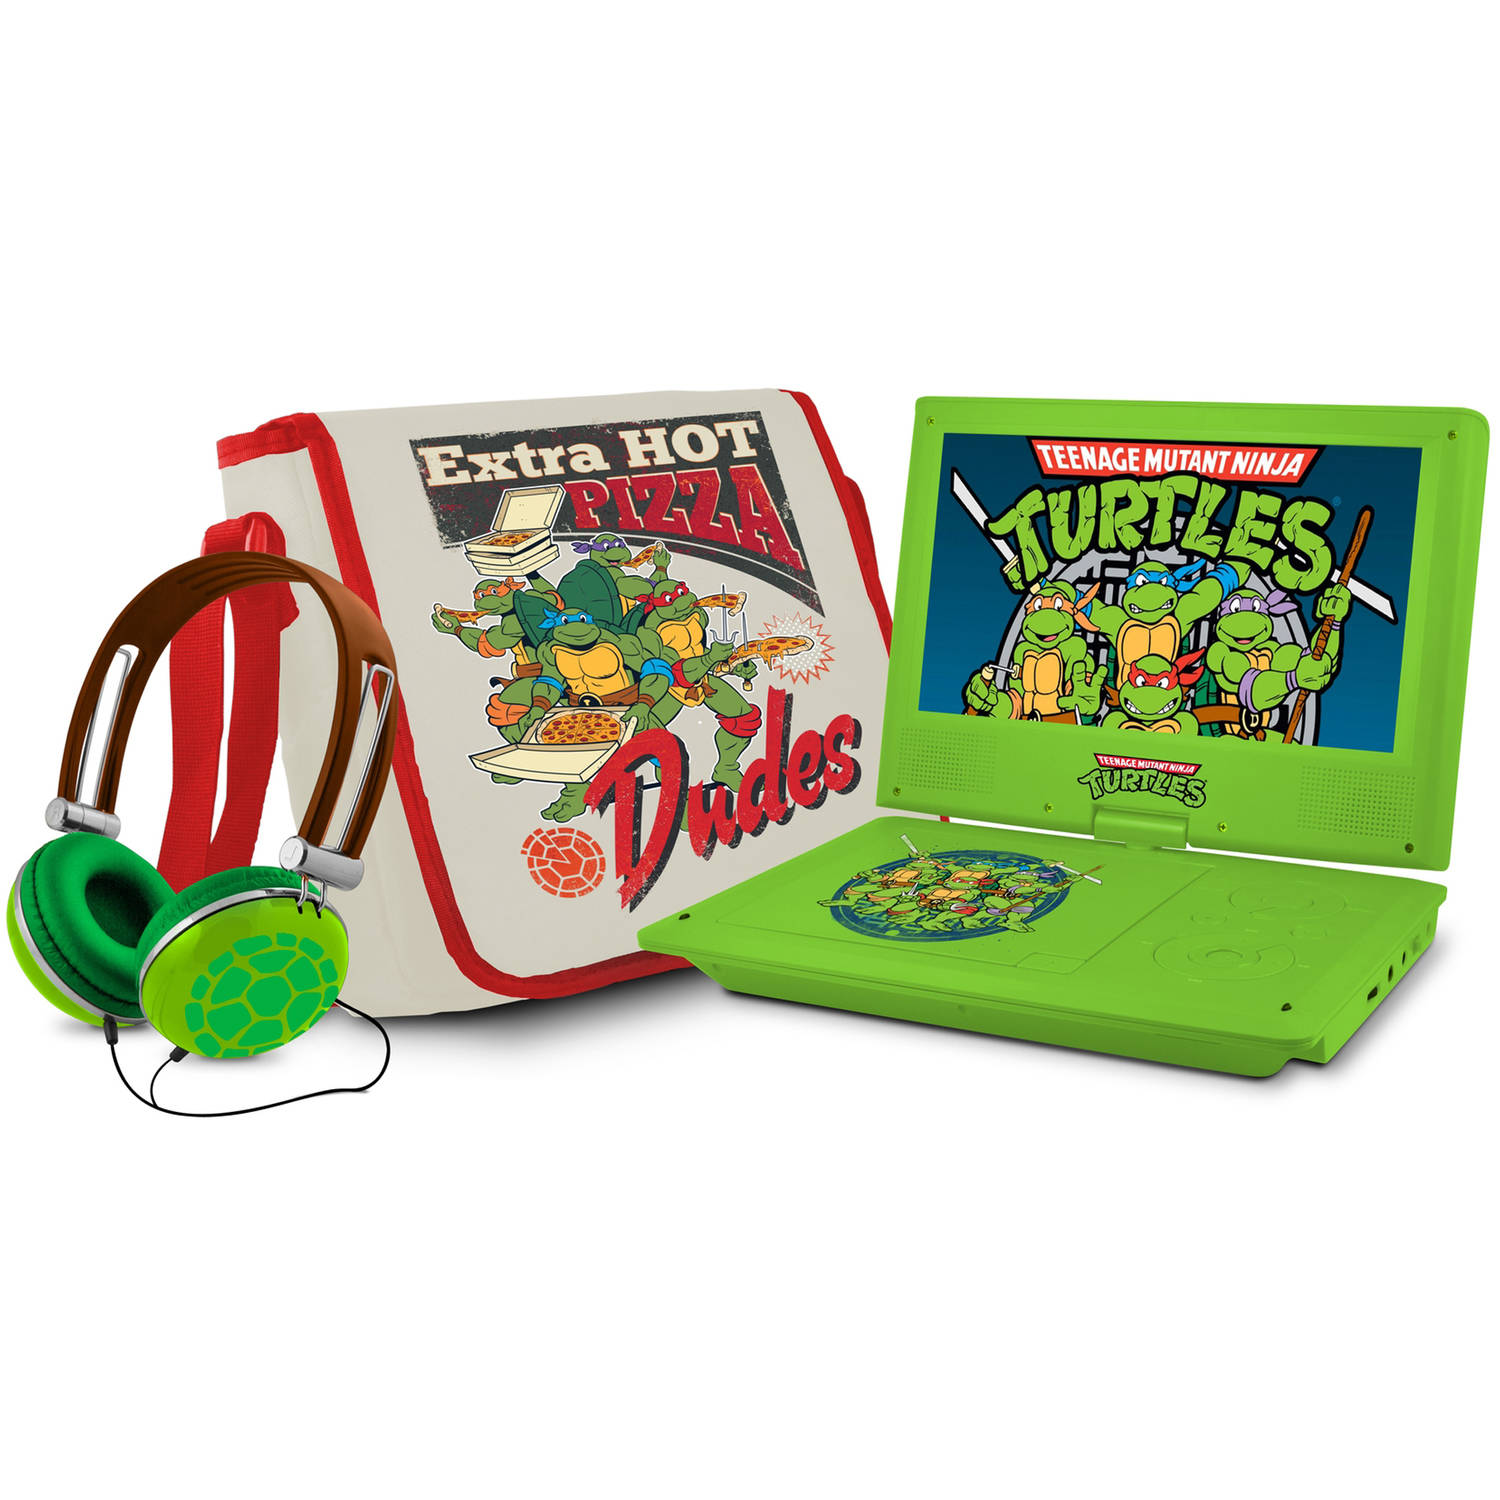 Teenage Mutant Ninja Turtles 7" Portable DVD Player with Carrying Bag and Headphones - image 1 of 4